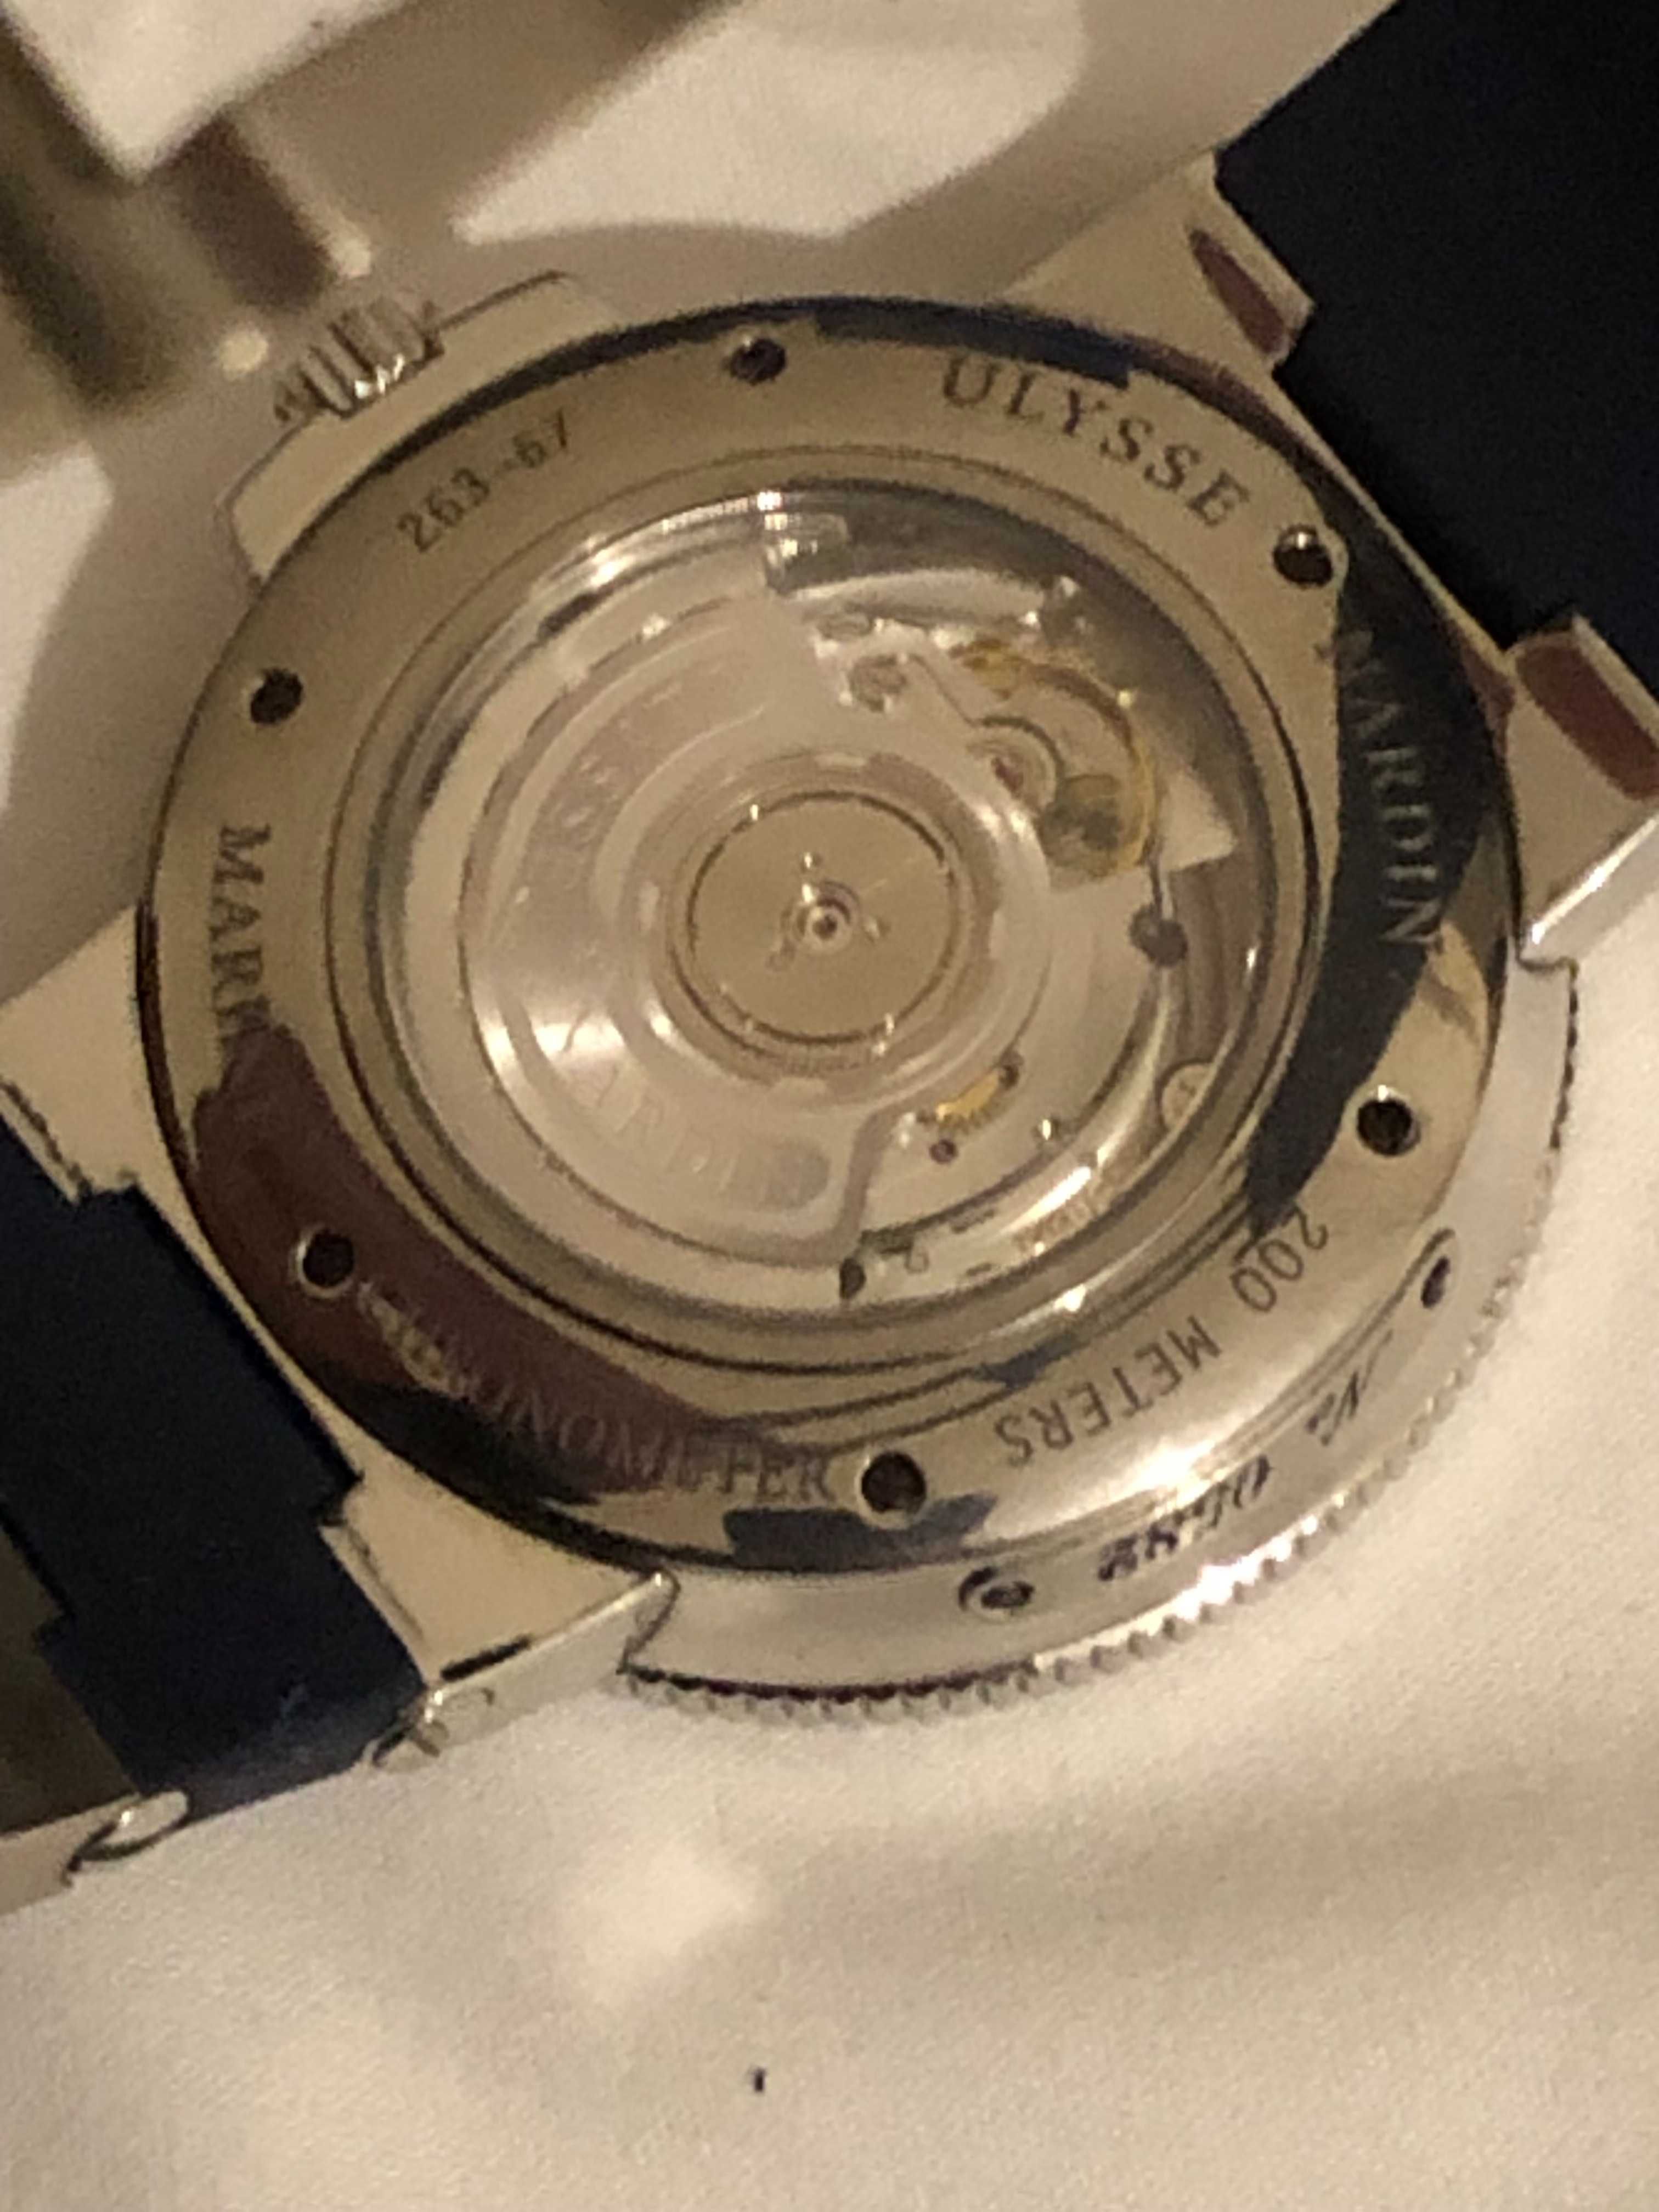 zegarek Ulysse Nardin model 263-67